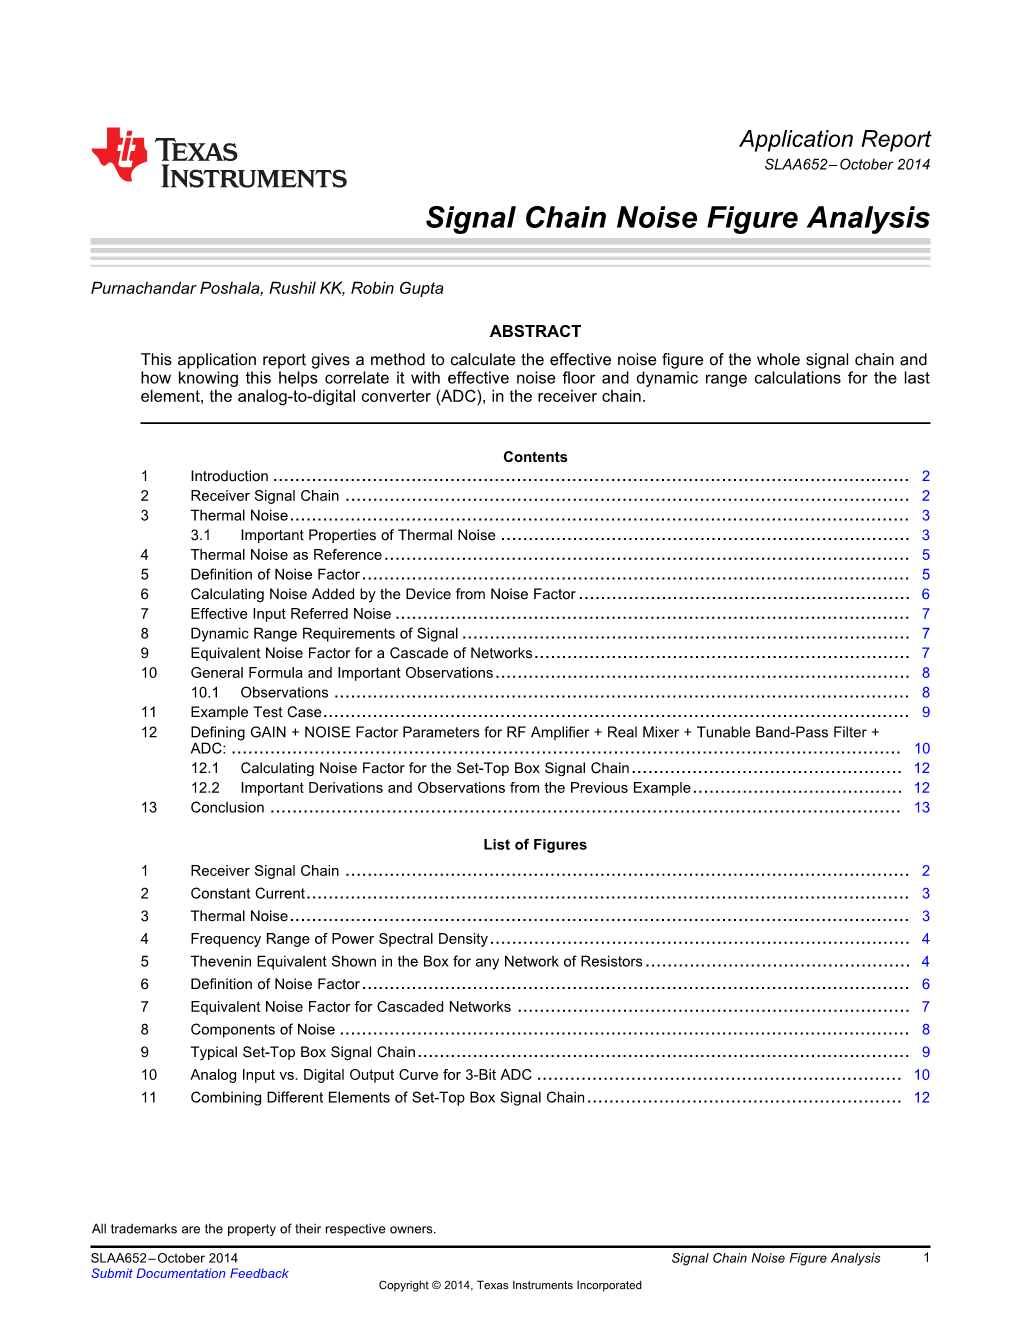 Signal Chain Noise Figure Analysis